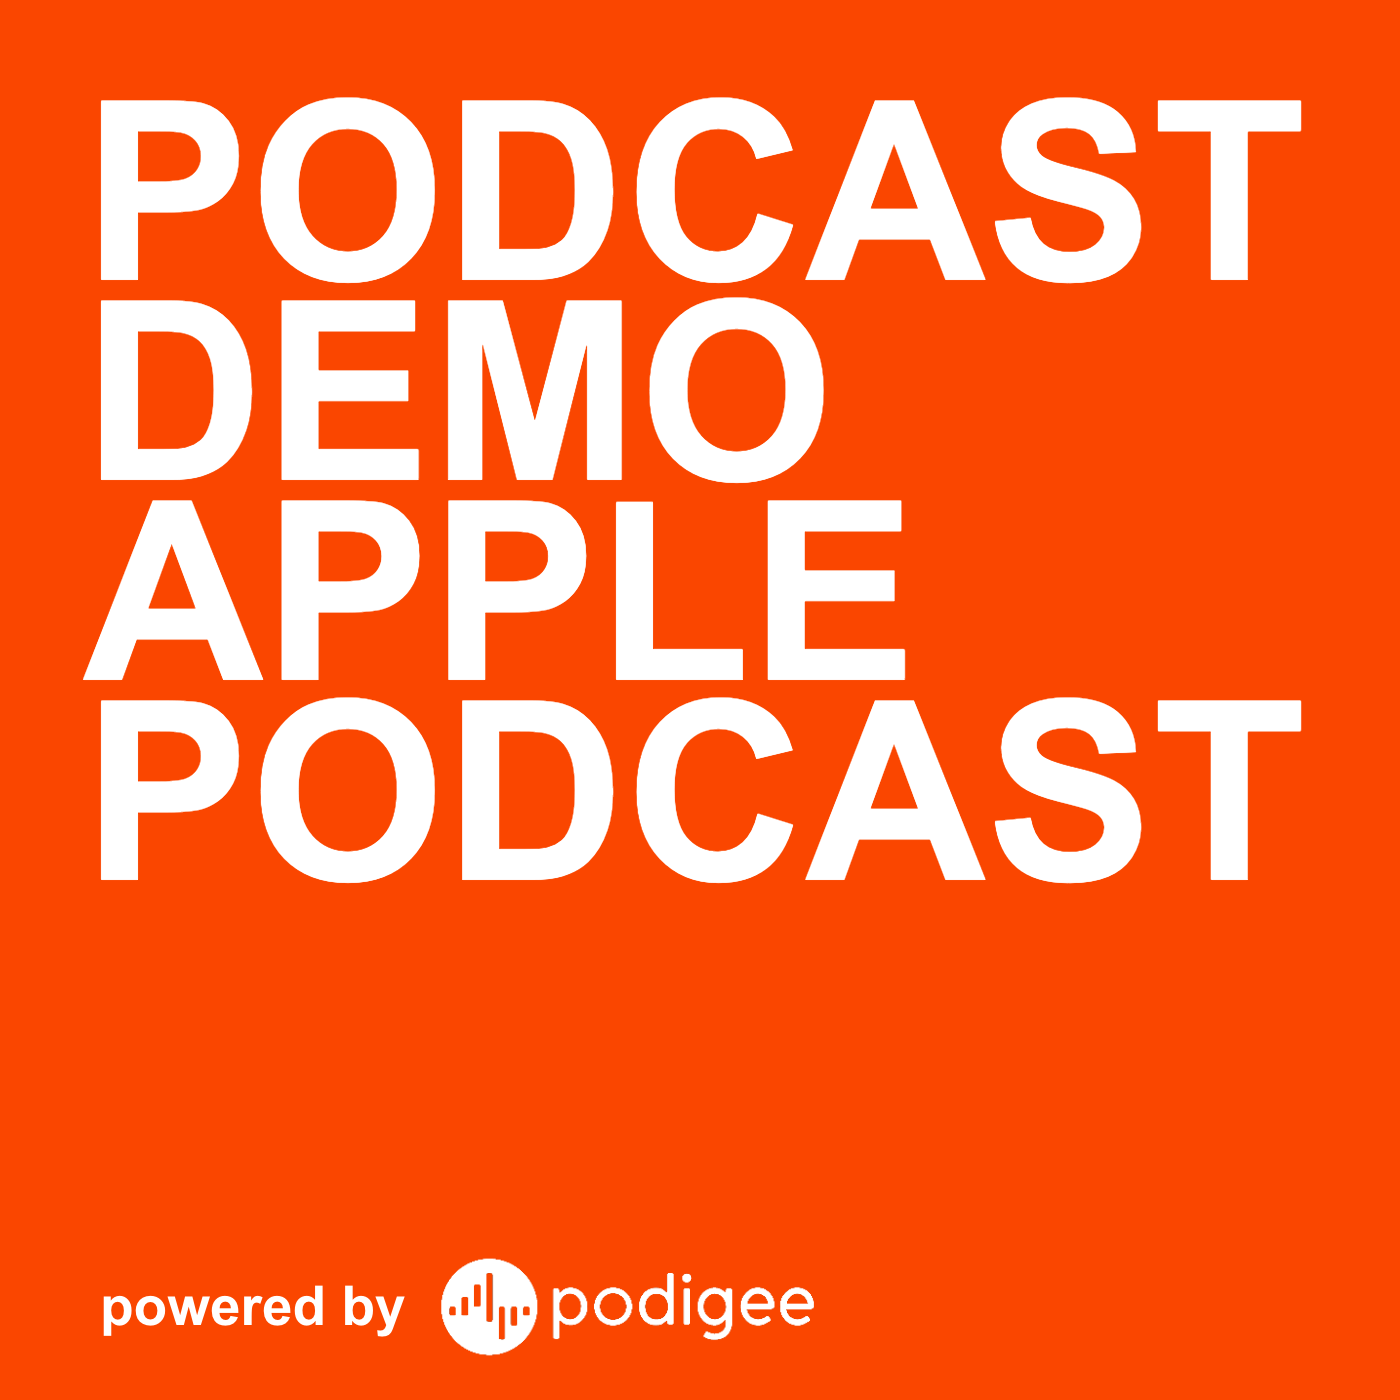 Podcast Demo Apple Podcast